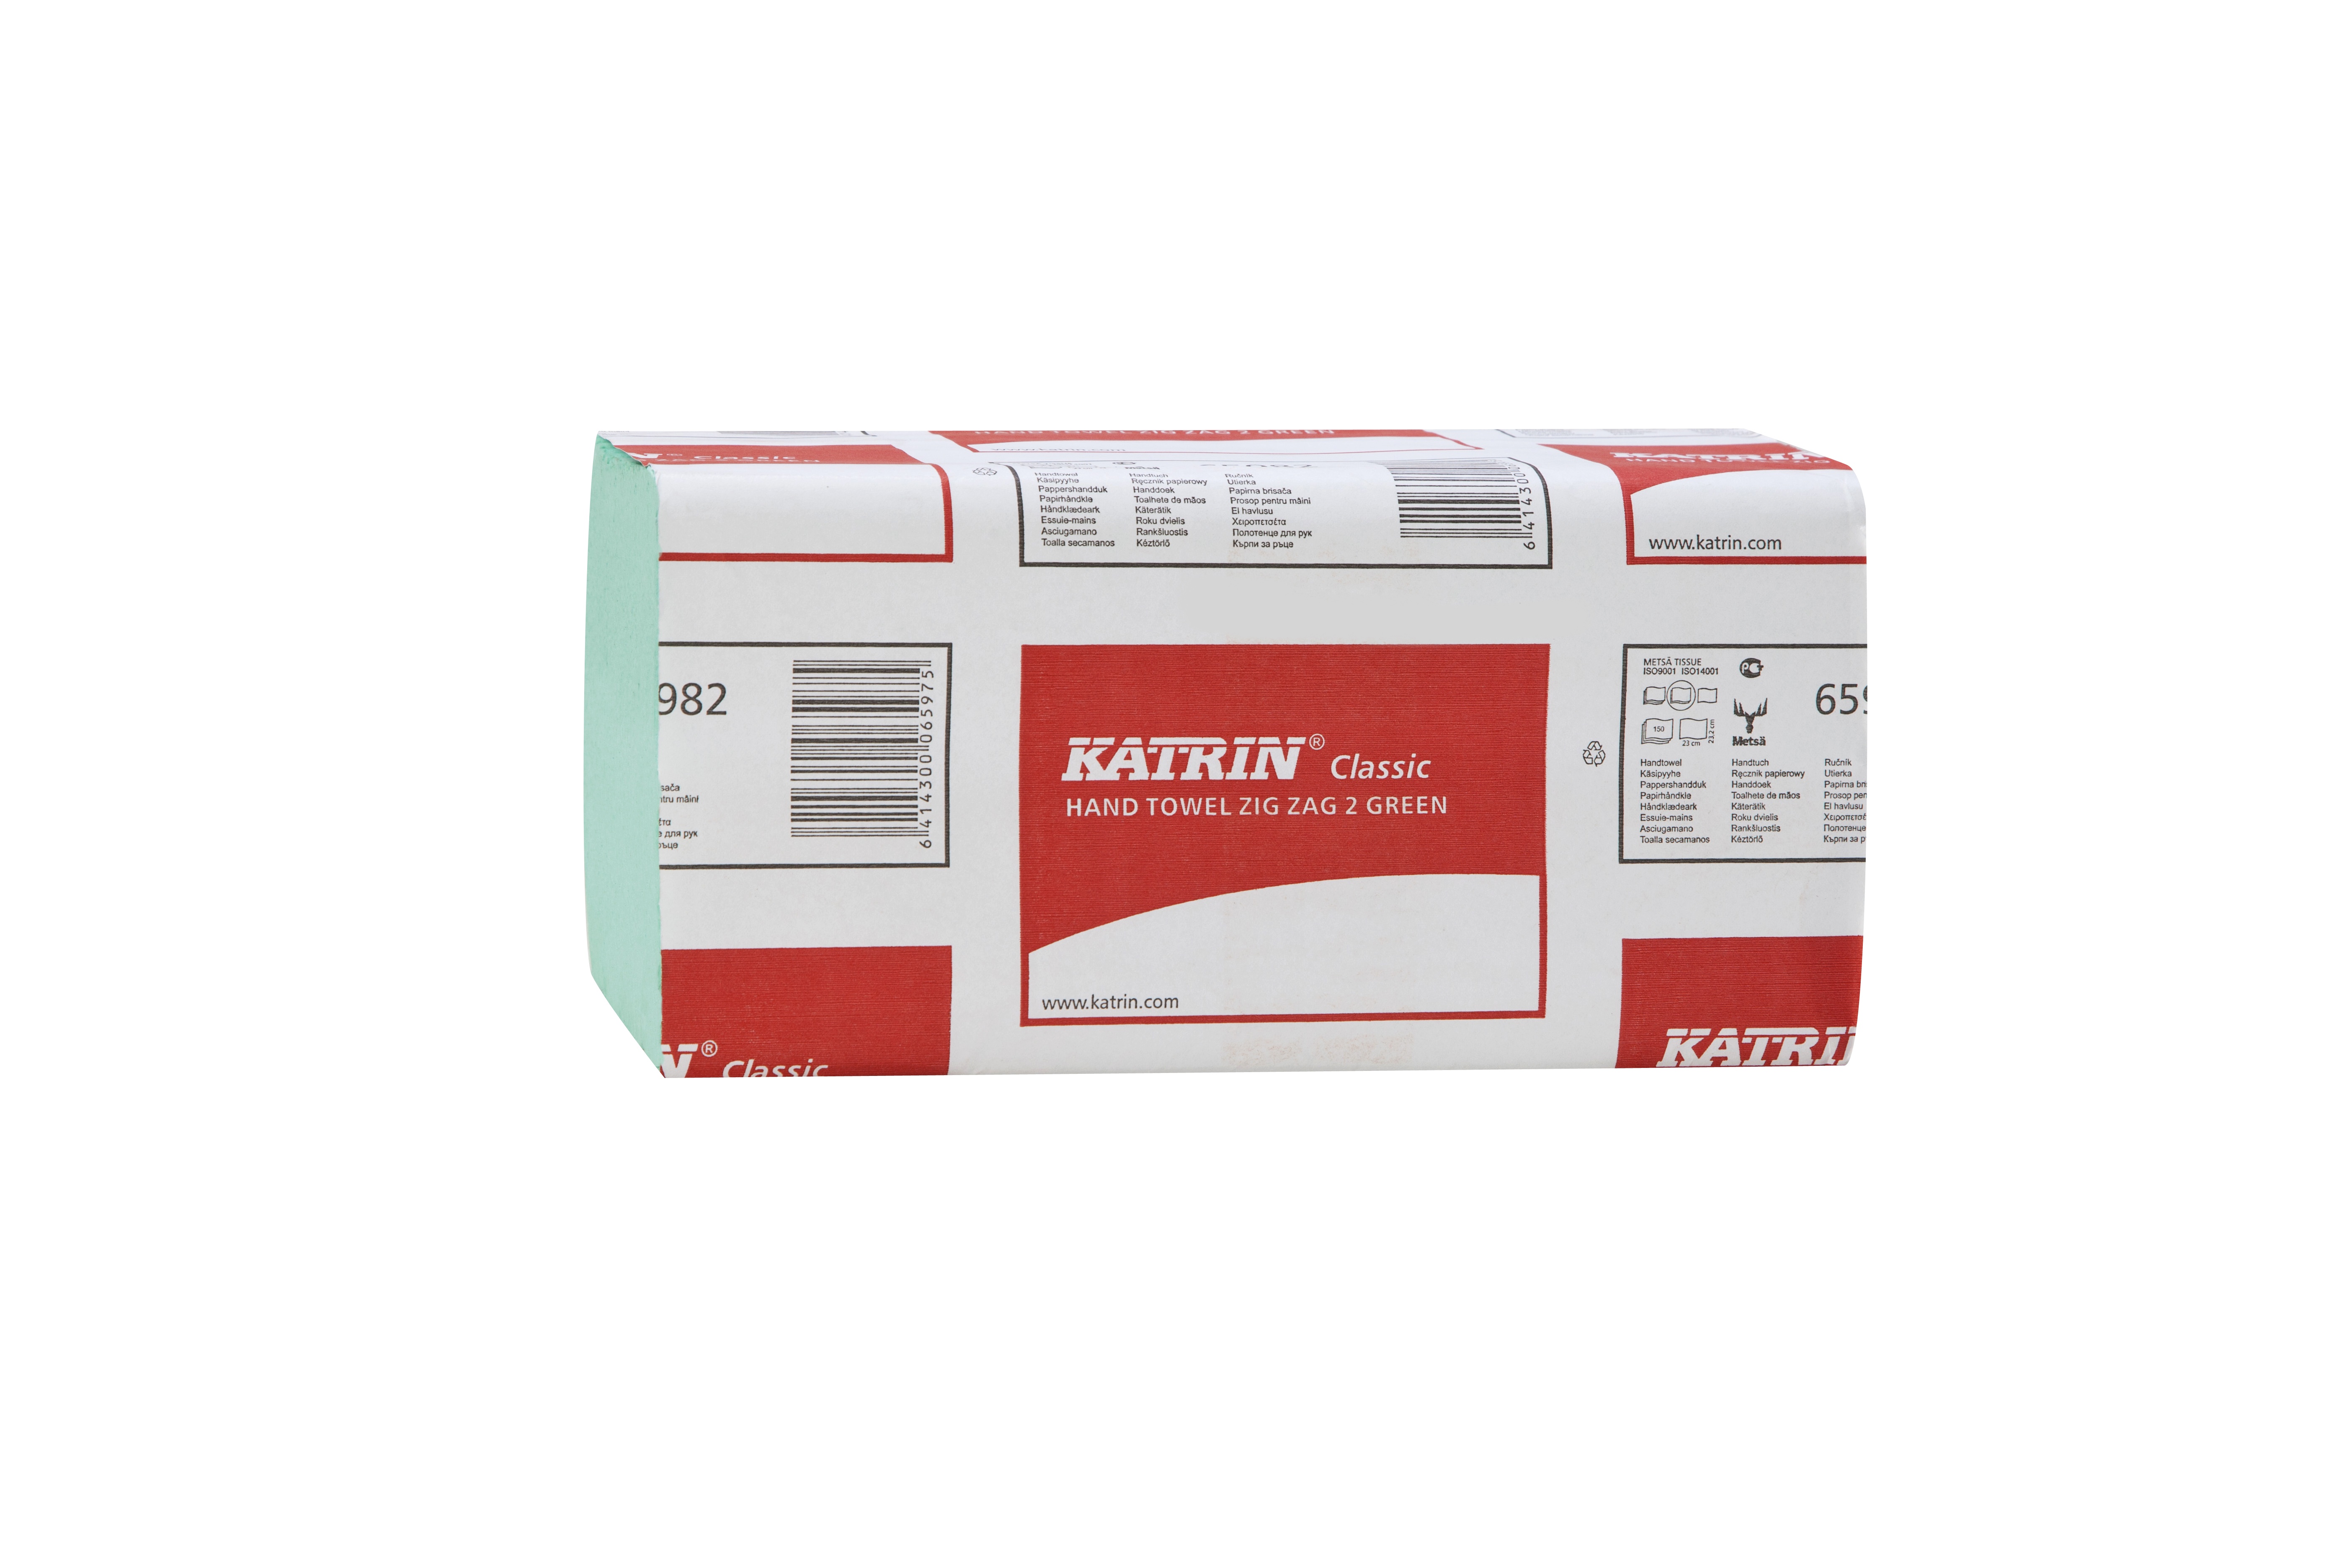 Katrin CLASSIC Hand Towel ZigZag 2 GREEN 65982